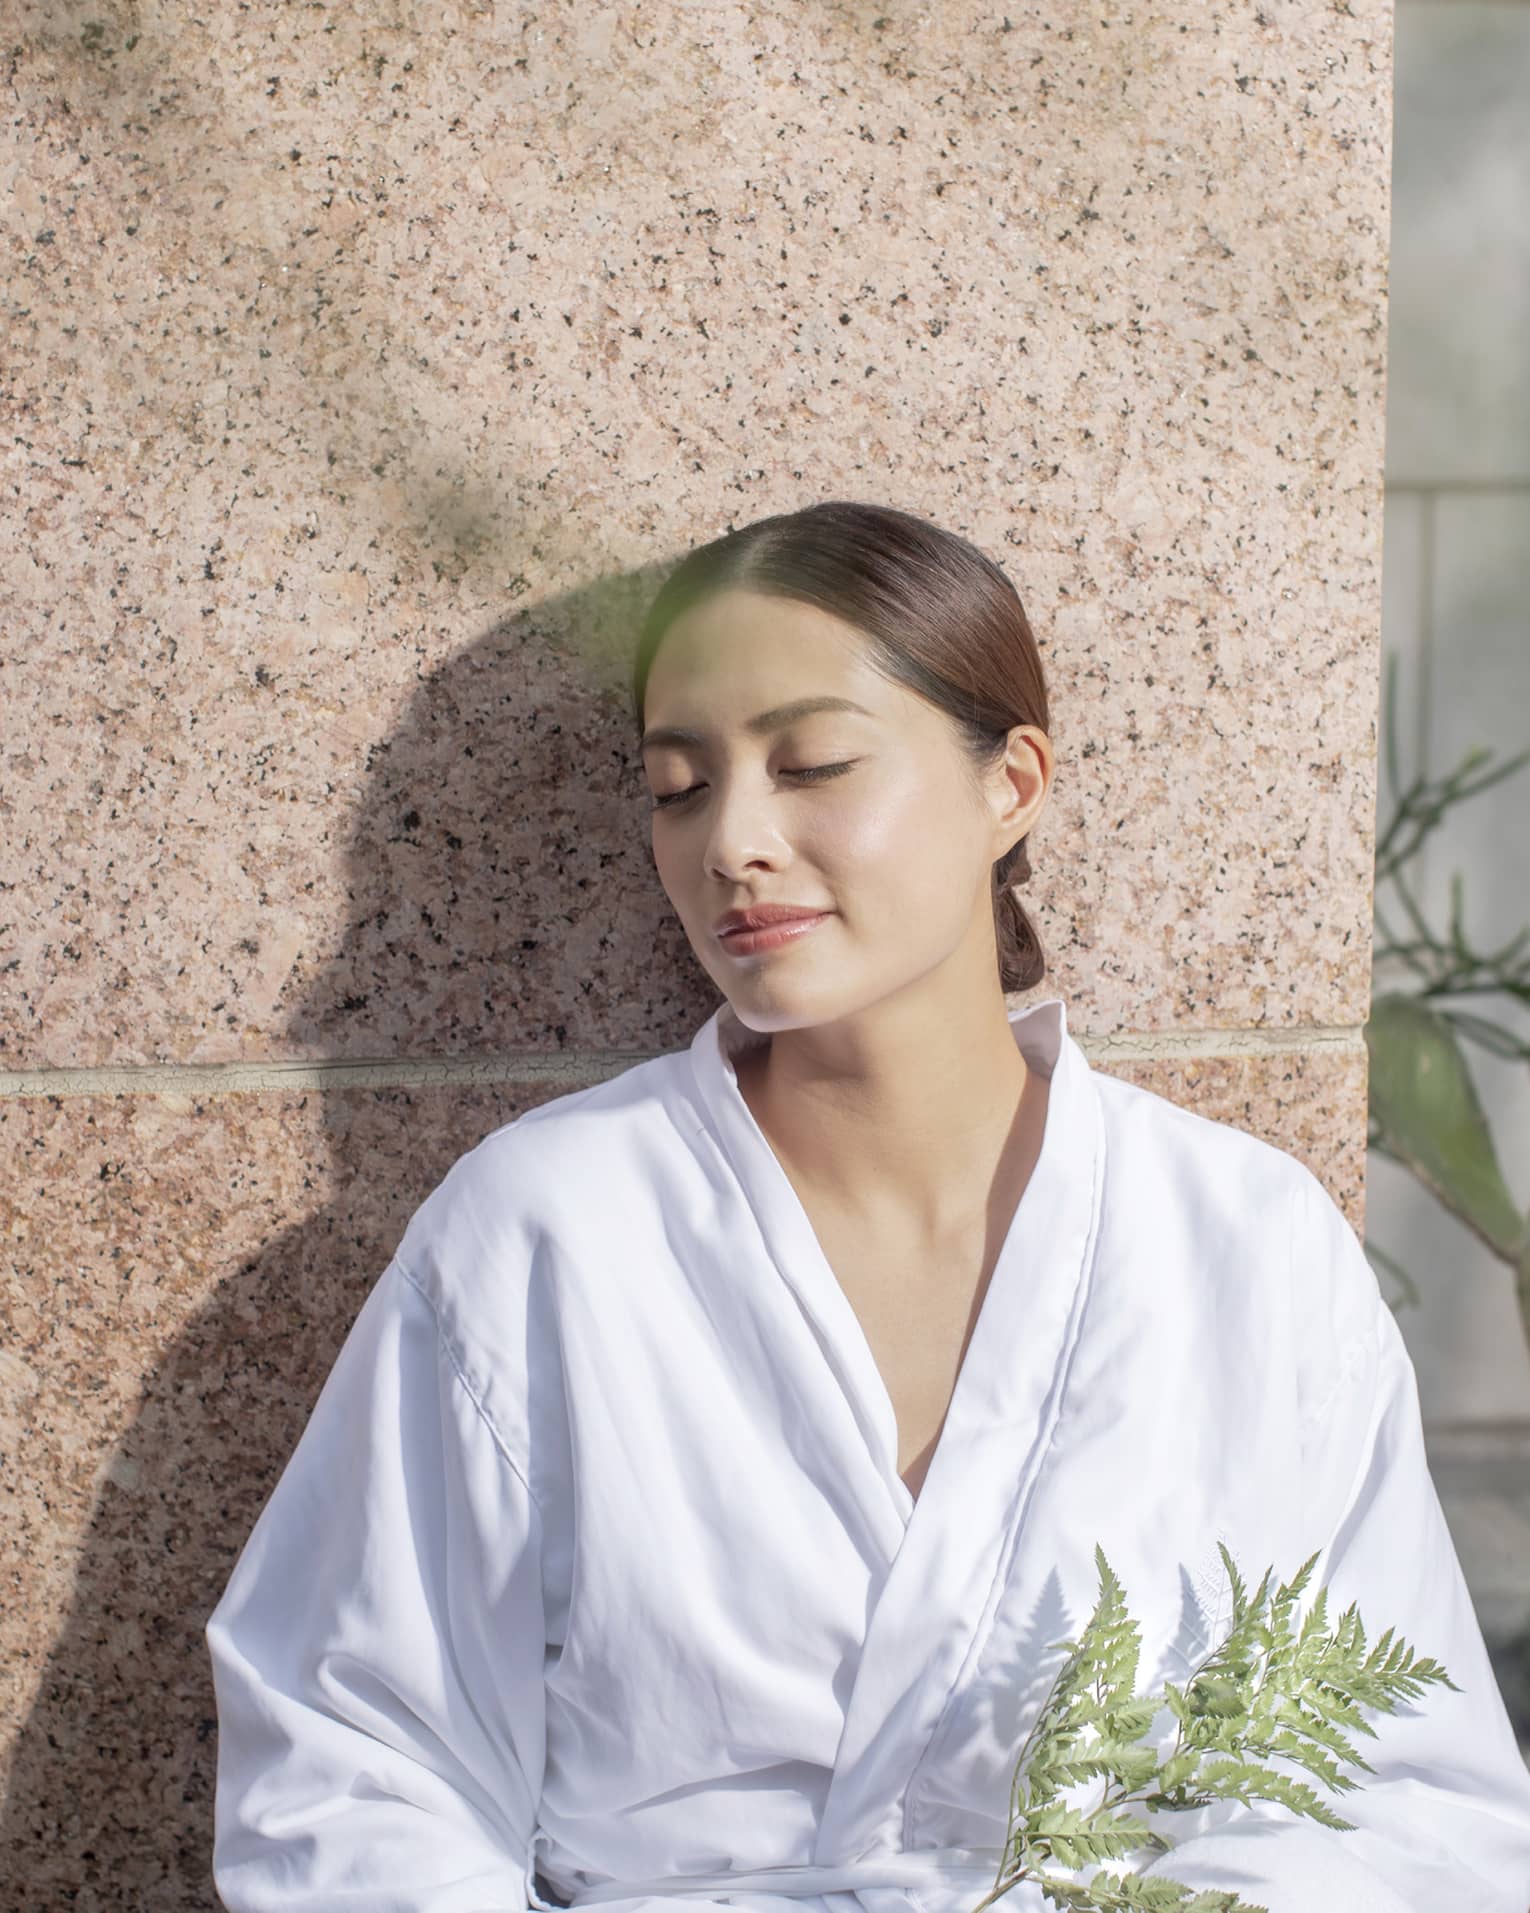 A woman resting outside near plants in a spa robe.